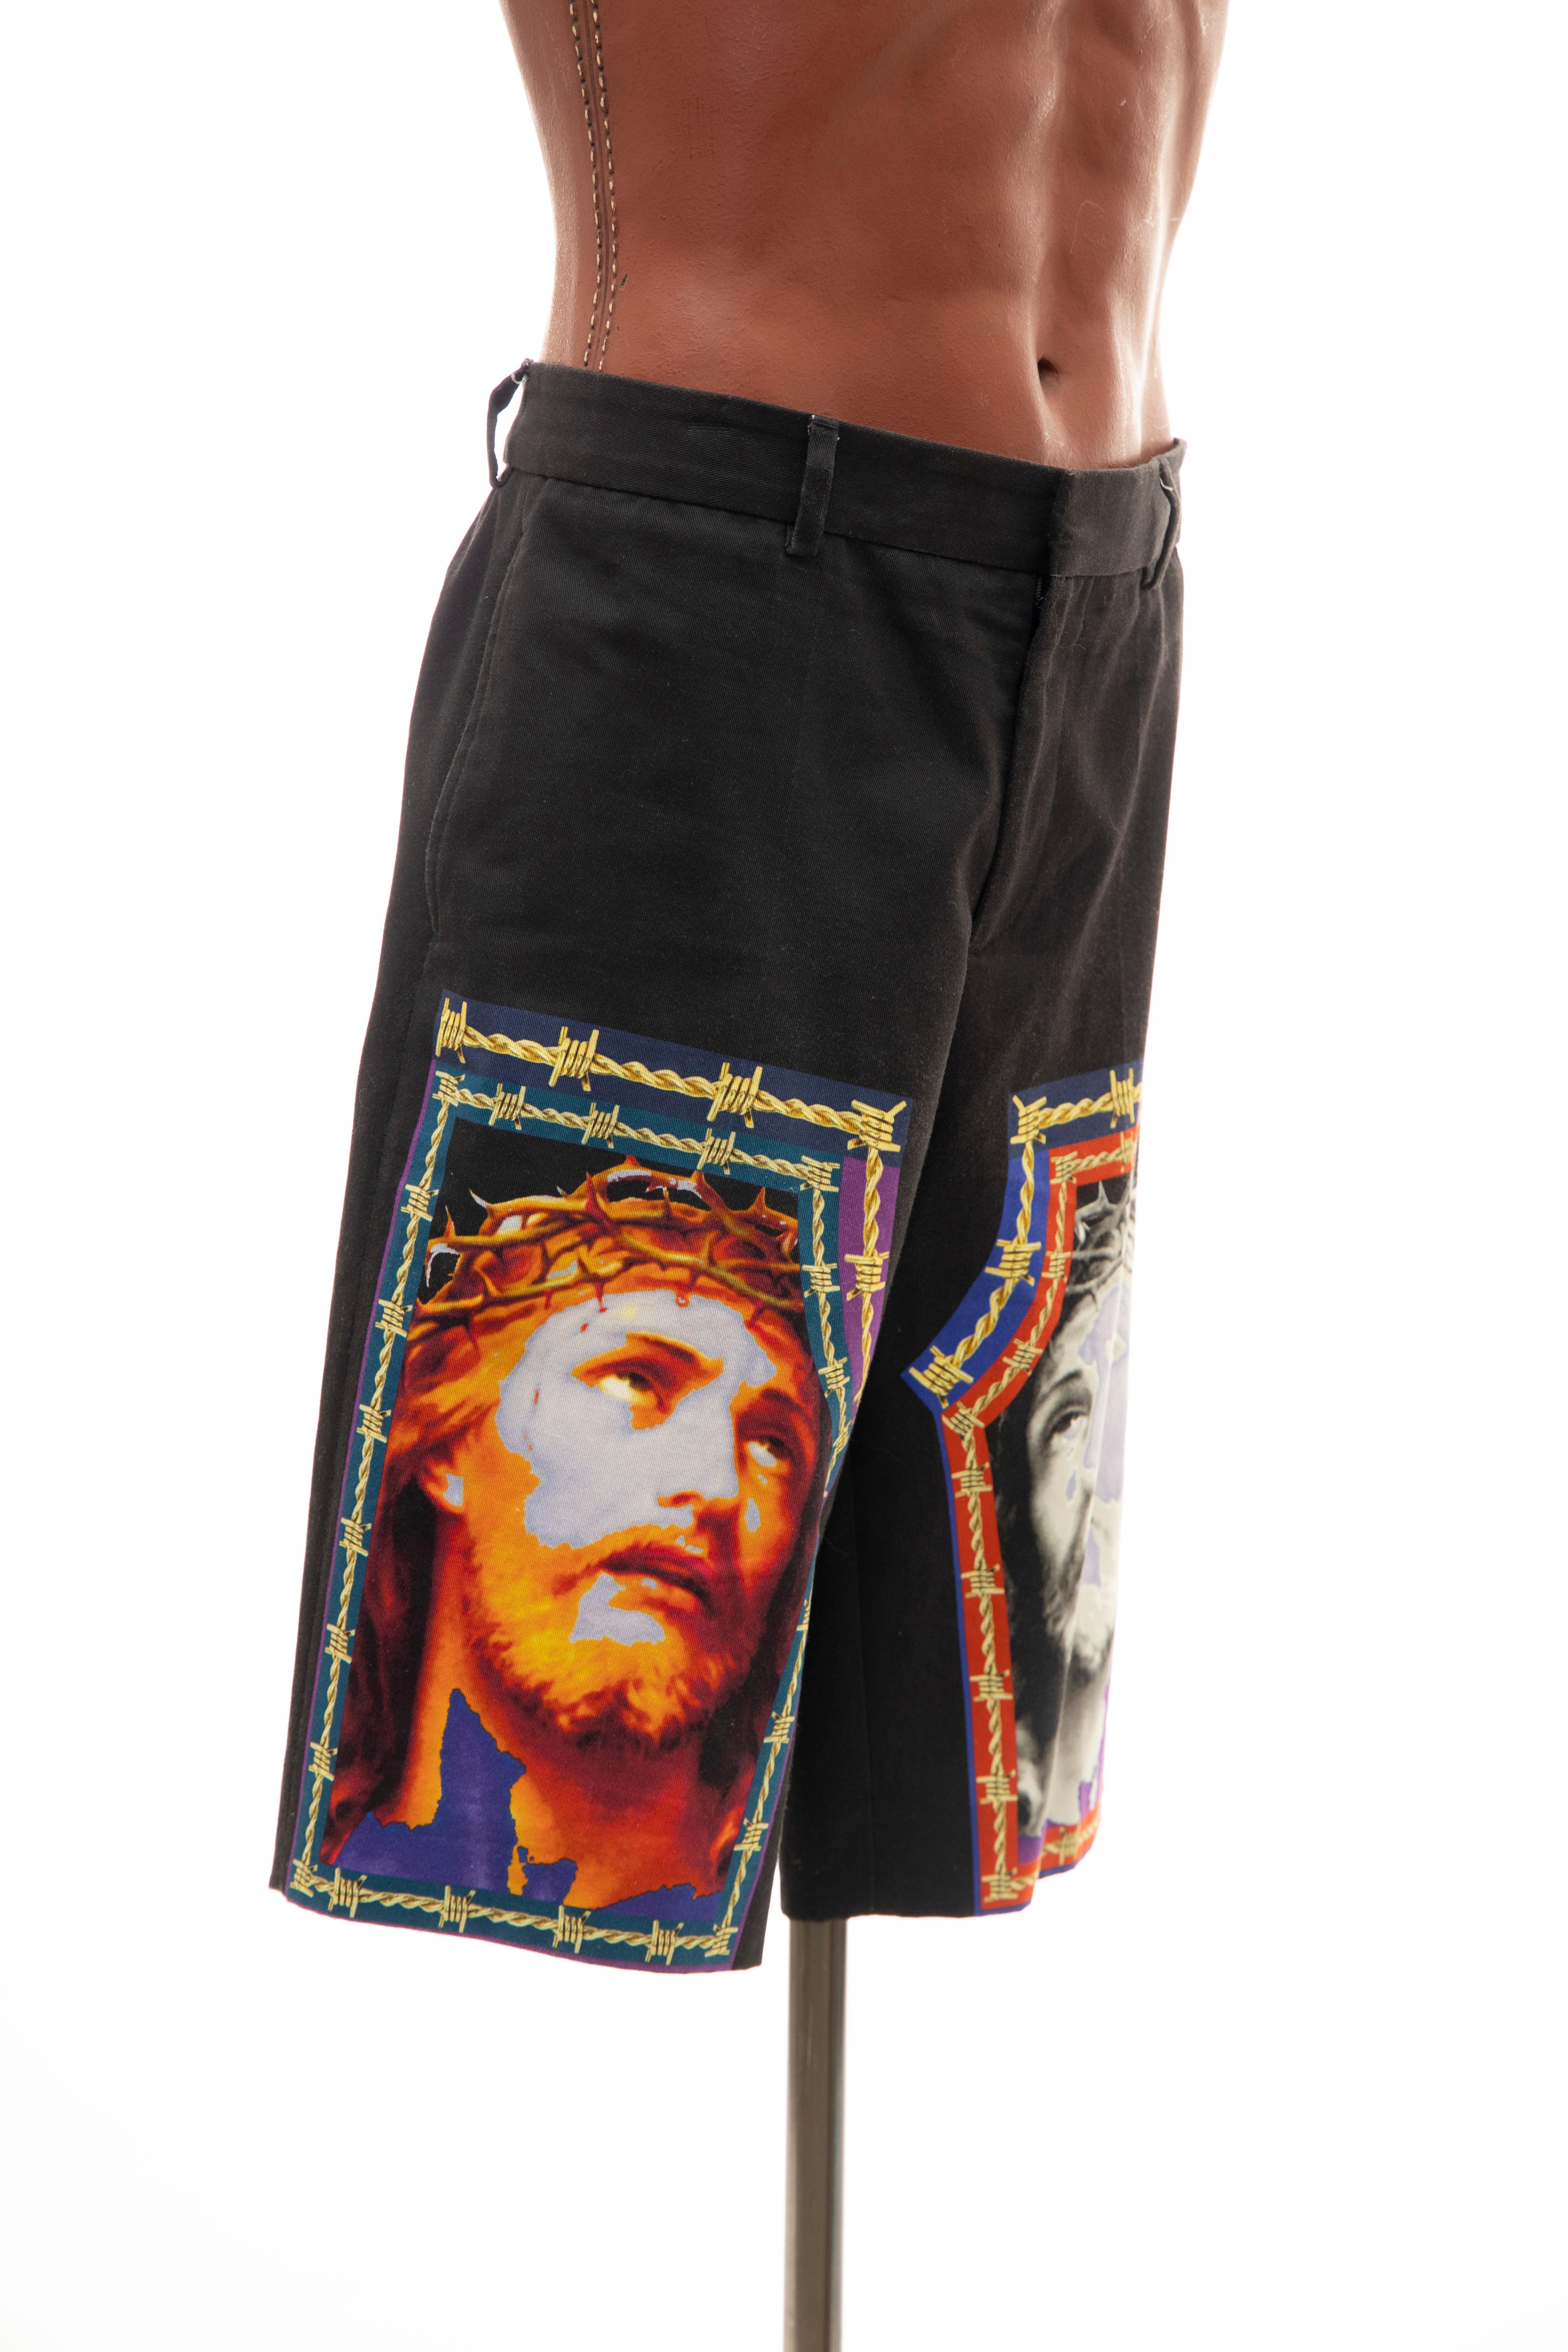 givenchy jesus shorts